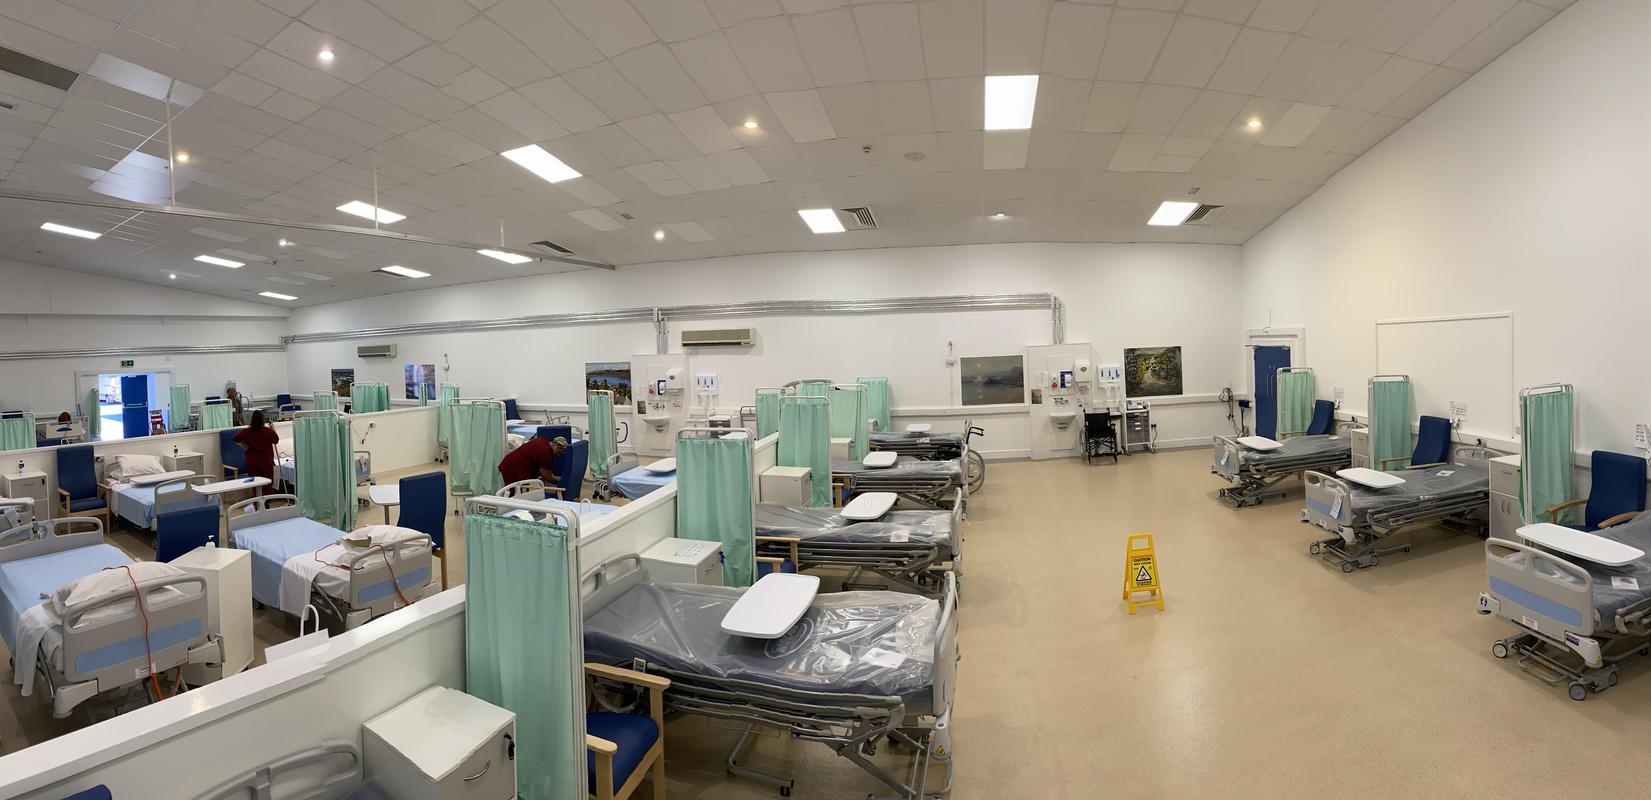 Ward at Hywel Dda University Health Board Field Hospital, Carmarthen. 1st June 2020.